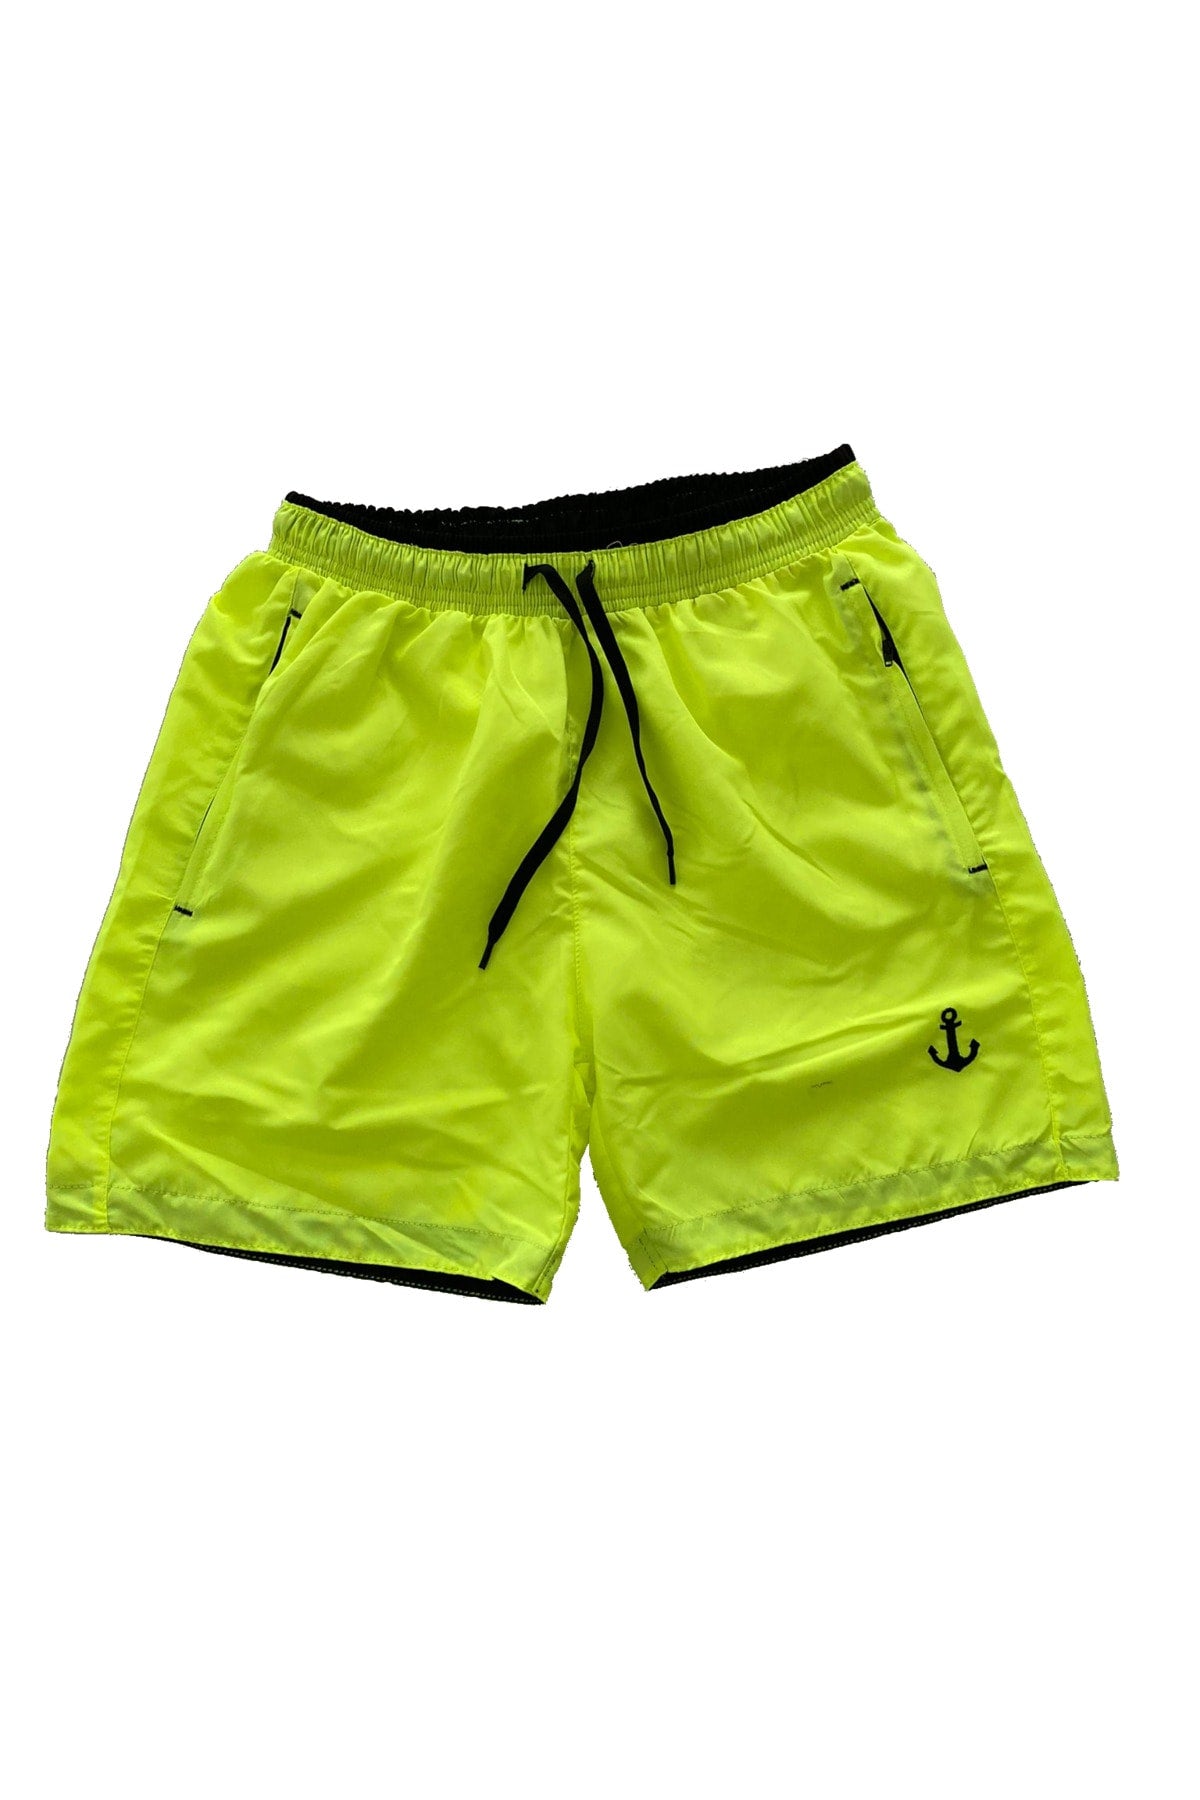 Colorful Pocket Zipper Marine Shorts